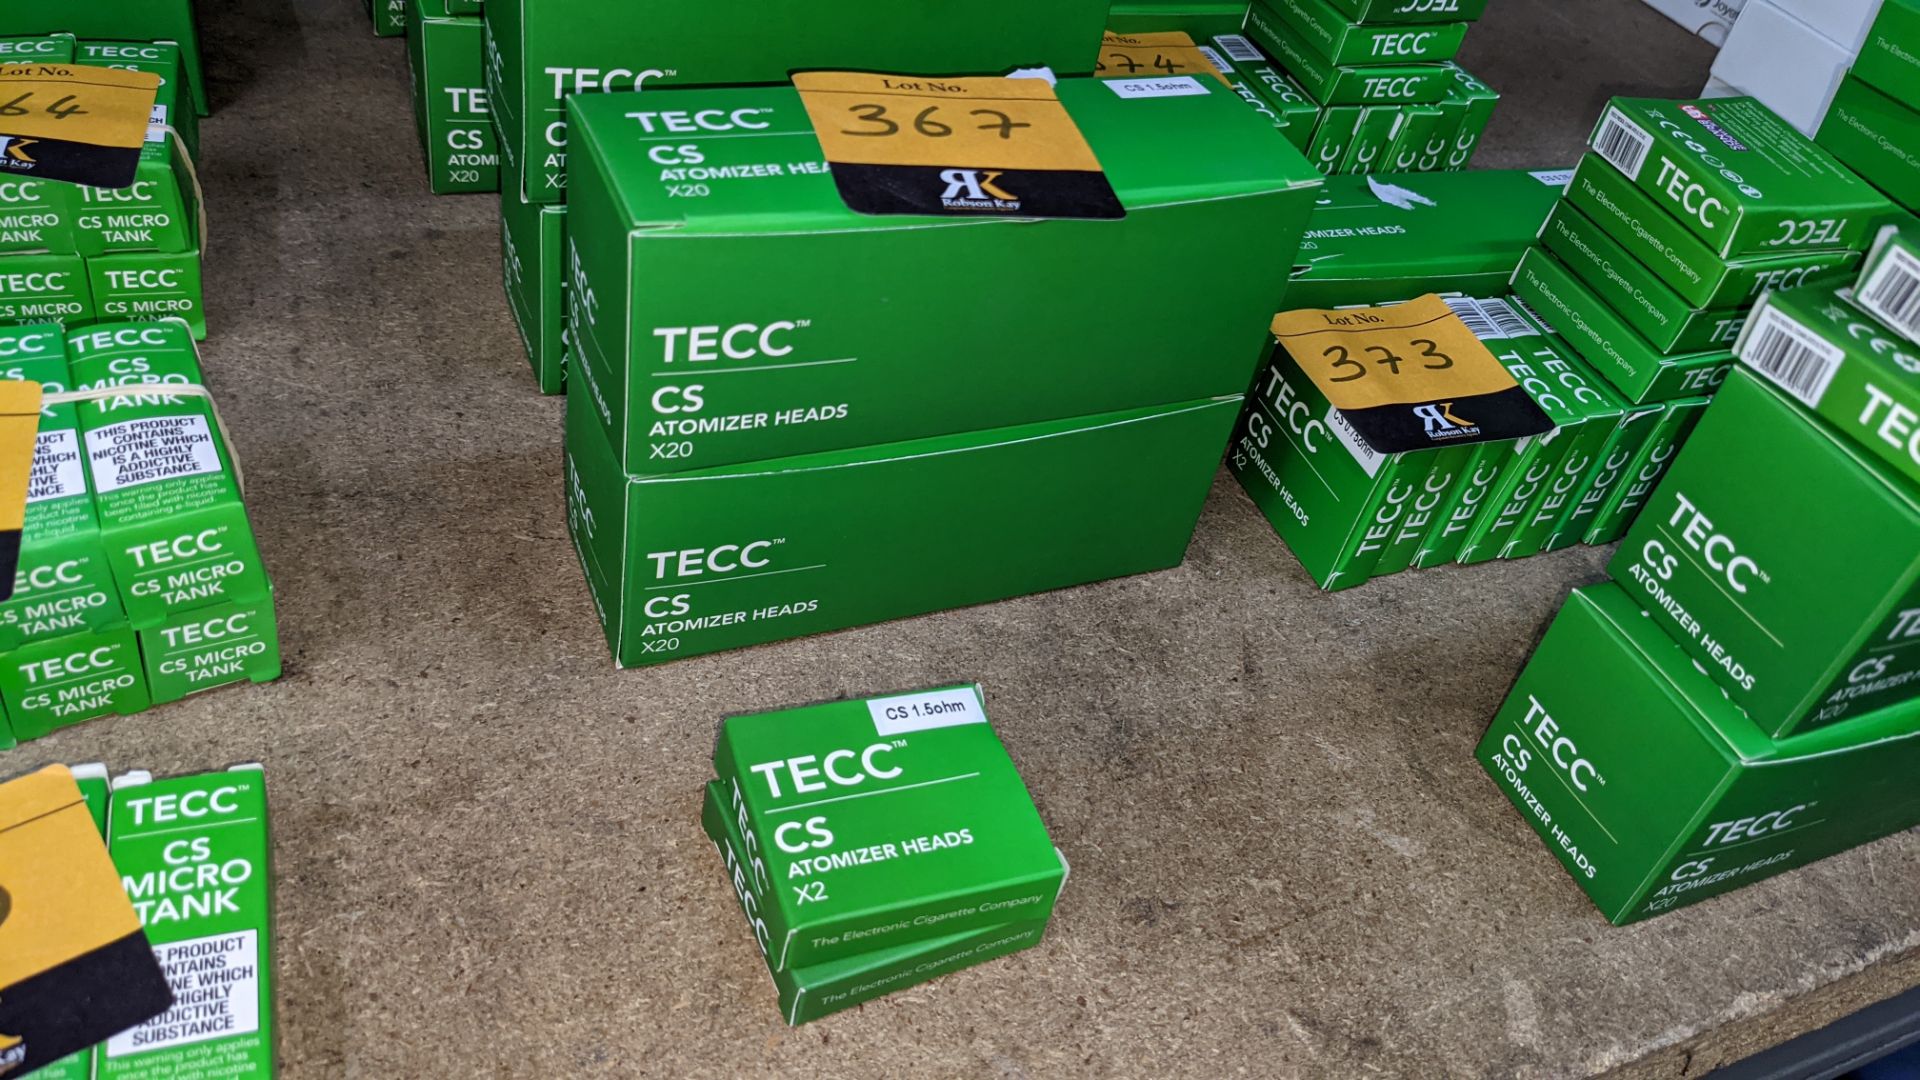 22 off TECC CS atomizer head twin packs (22 packs each containing 2 heads). 1.5ohm